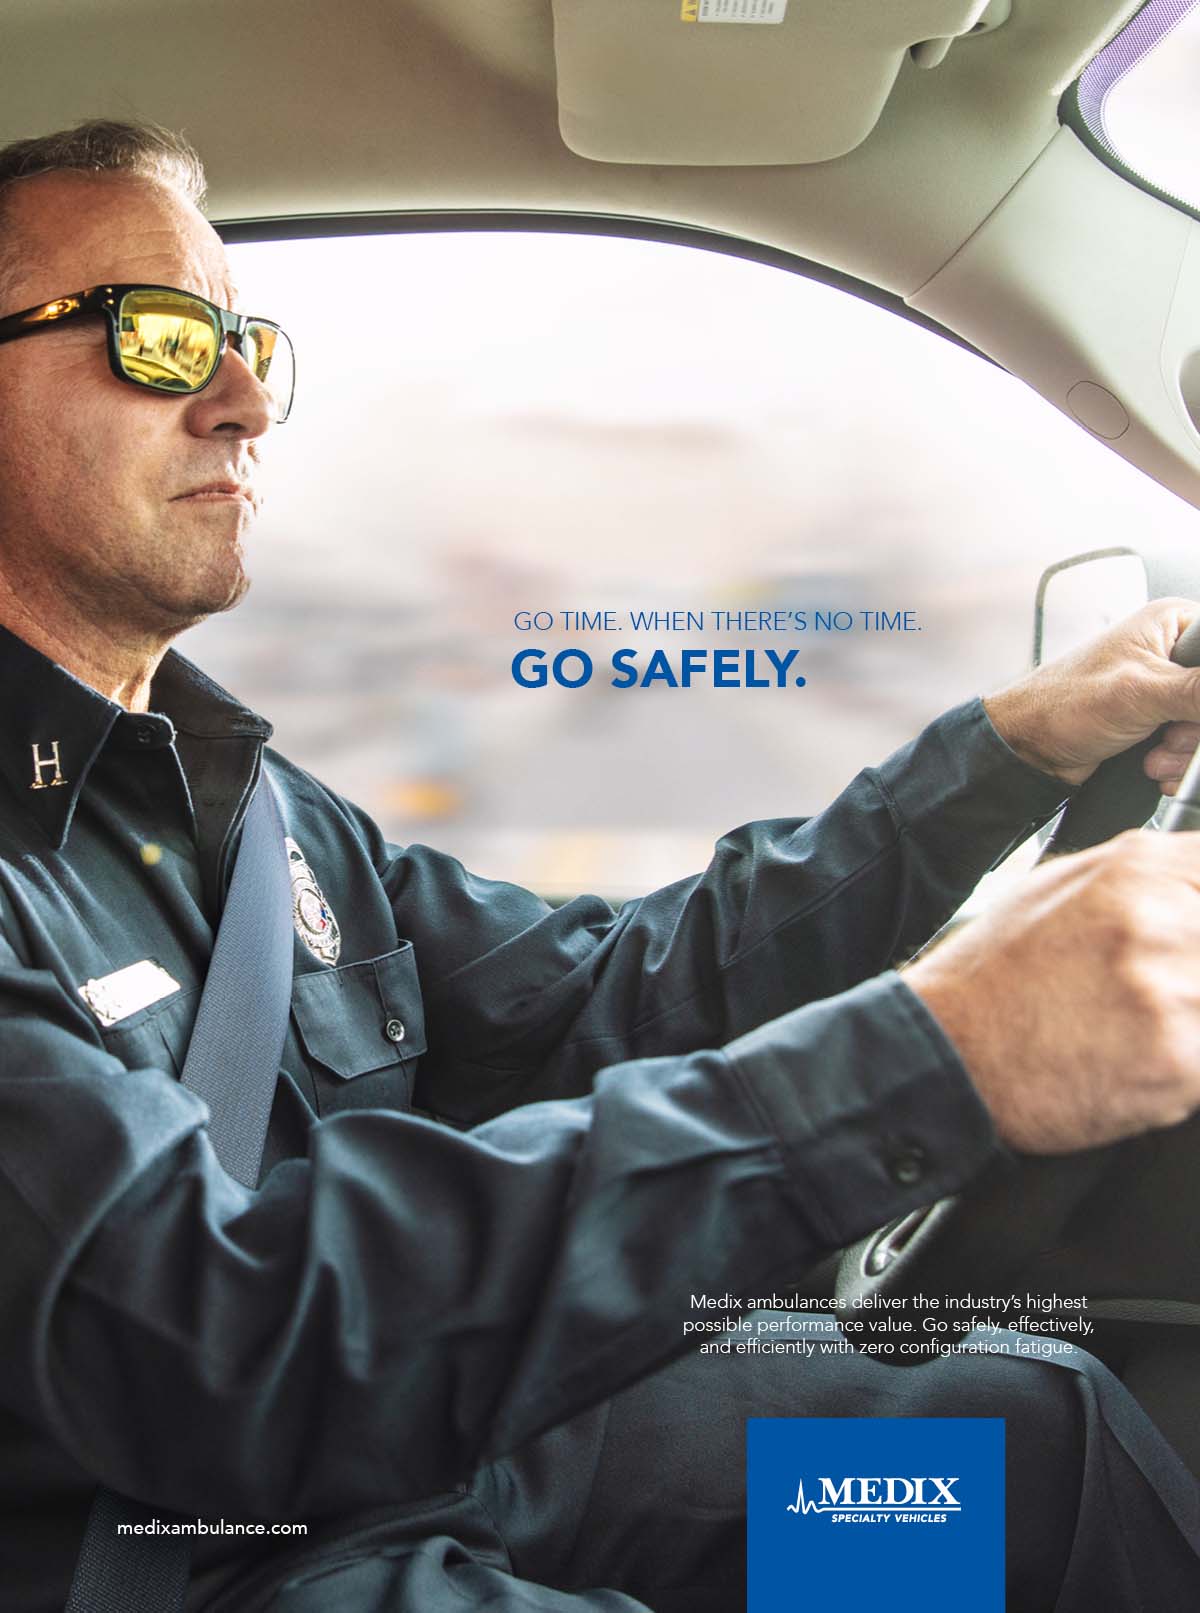 A close up photo of a Medix Ambulance driver wearing a seat belt, EMS uniform and sunglasses